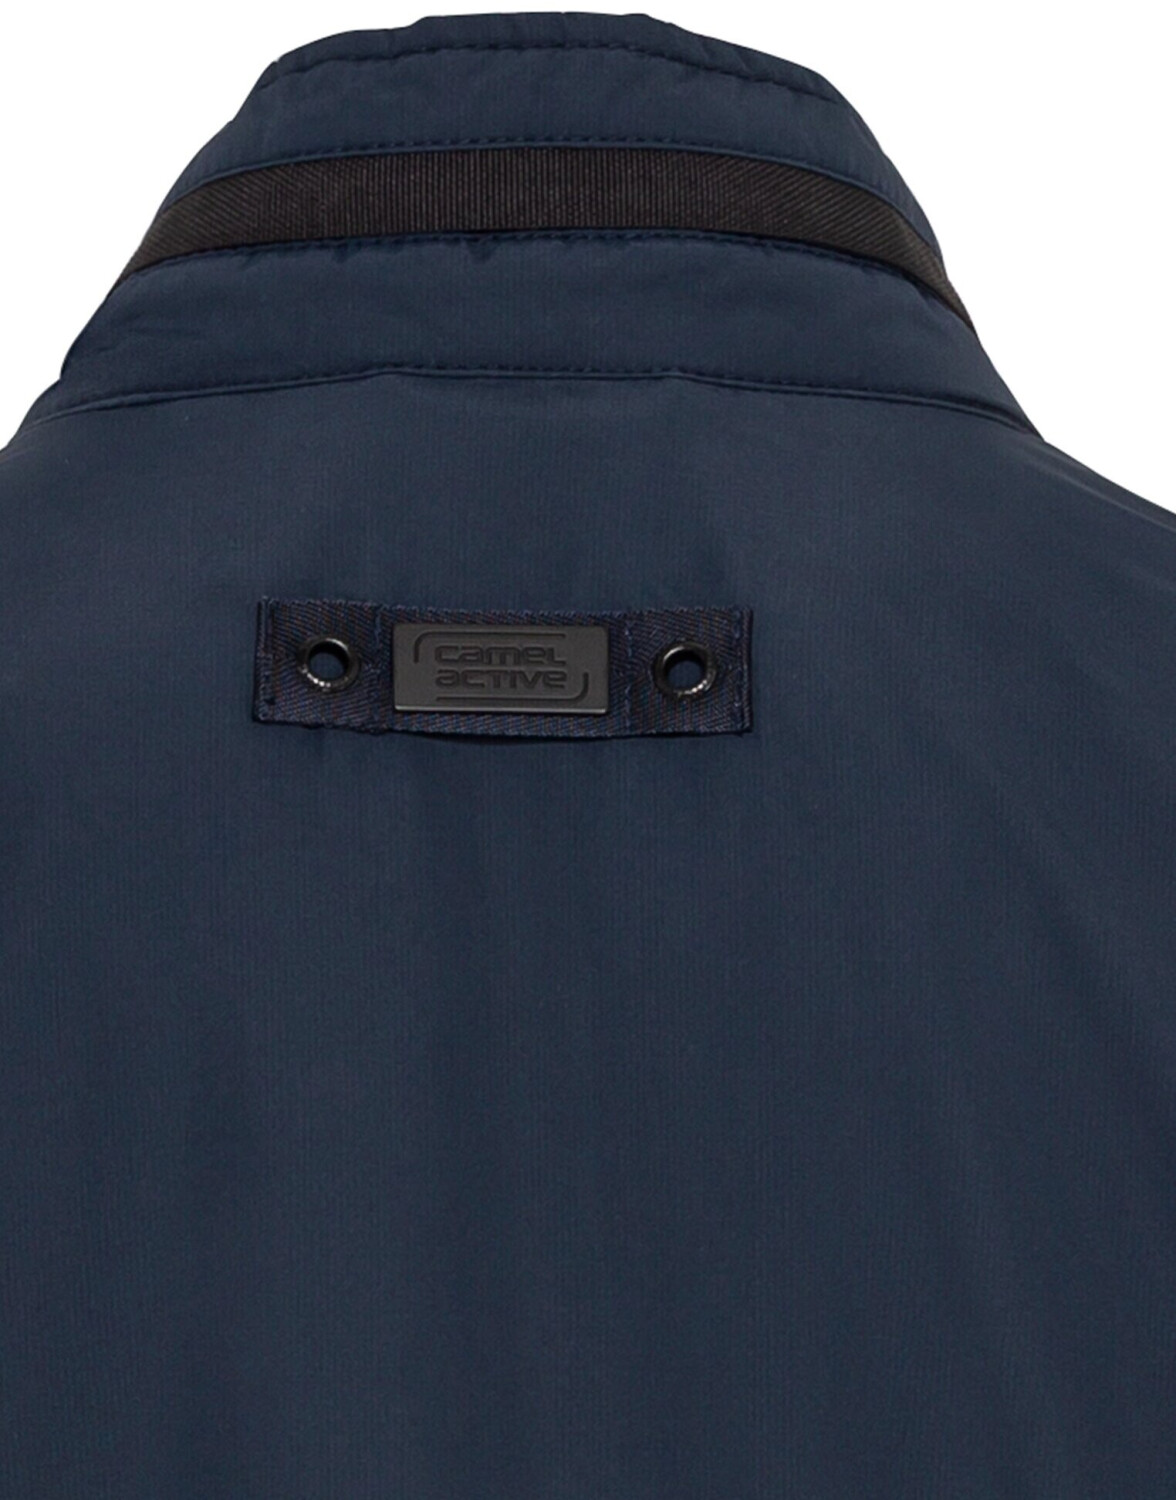 Camel Active Leichte Outdoorjacke aus recyceltem Polyester (420260 1O57 47)  night blue ab 99,95 € | Preisvergleich bei